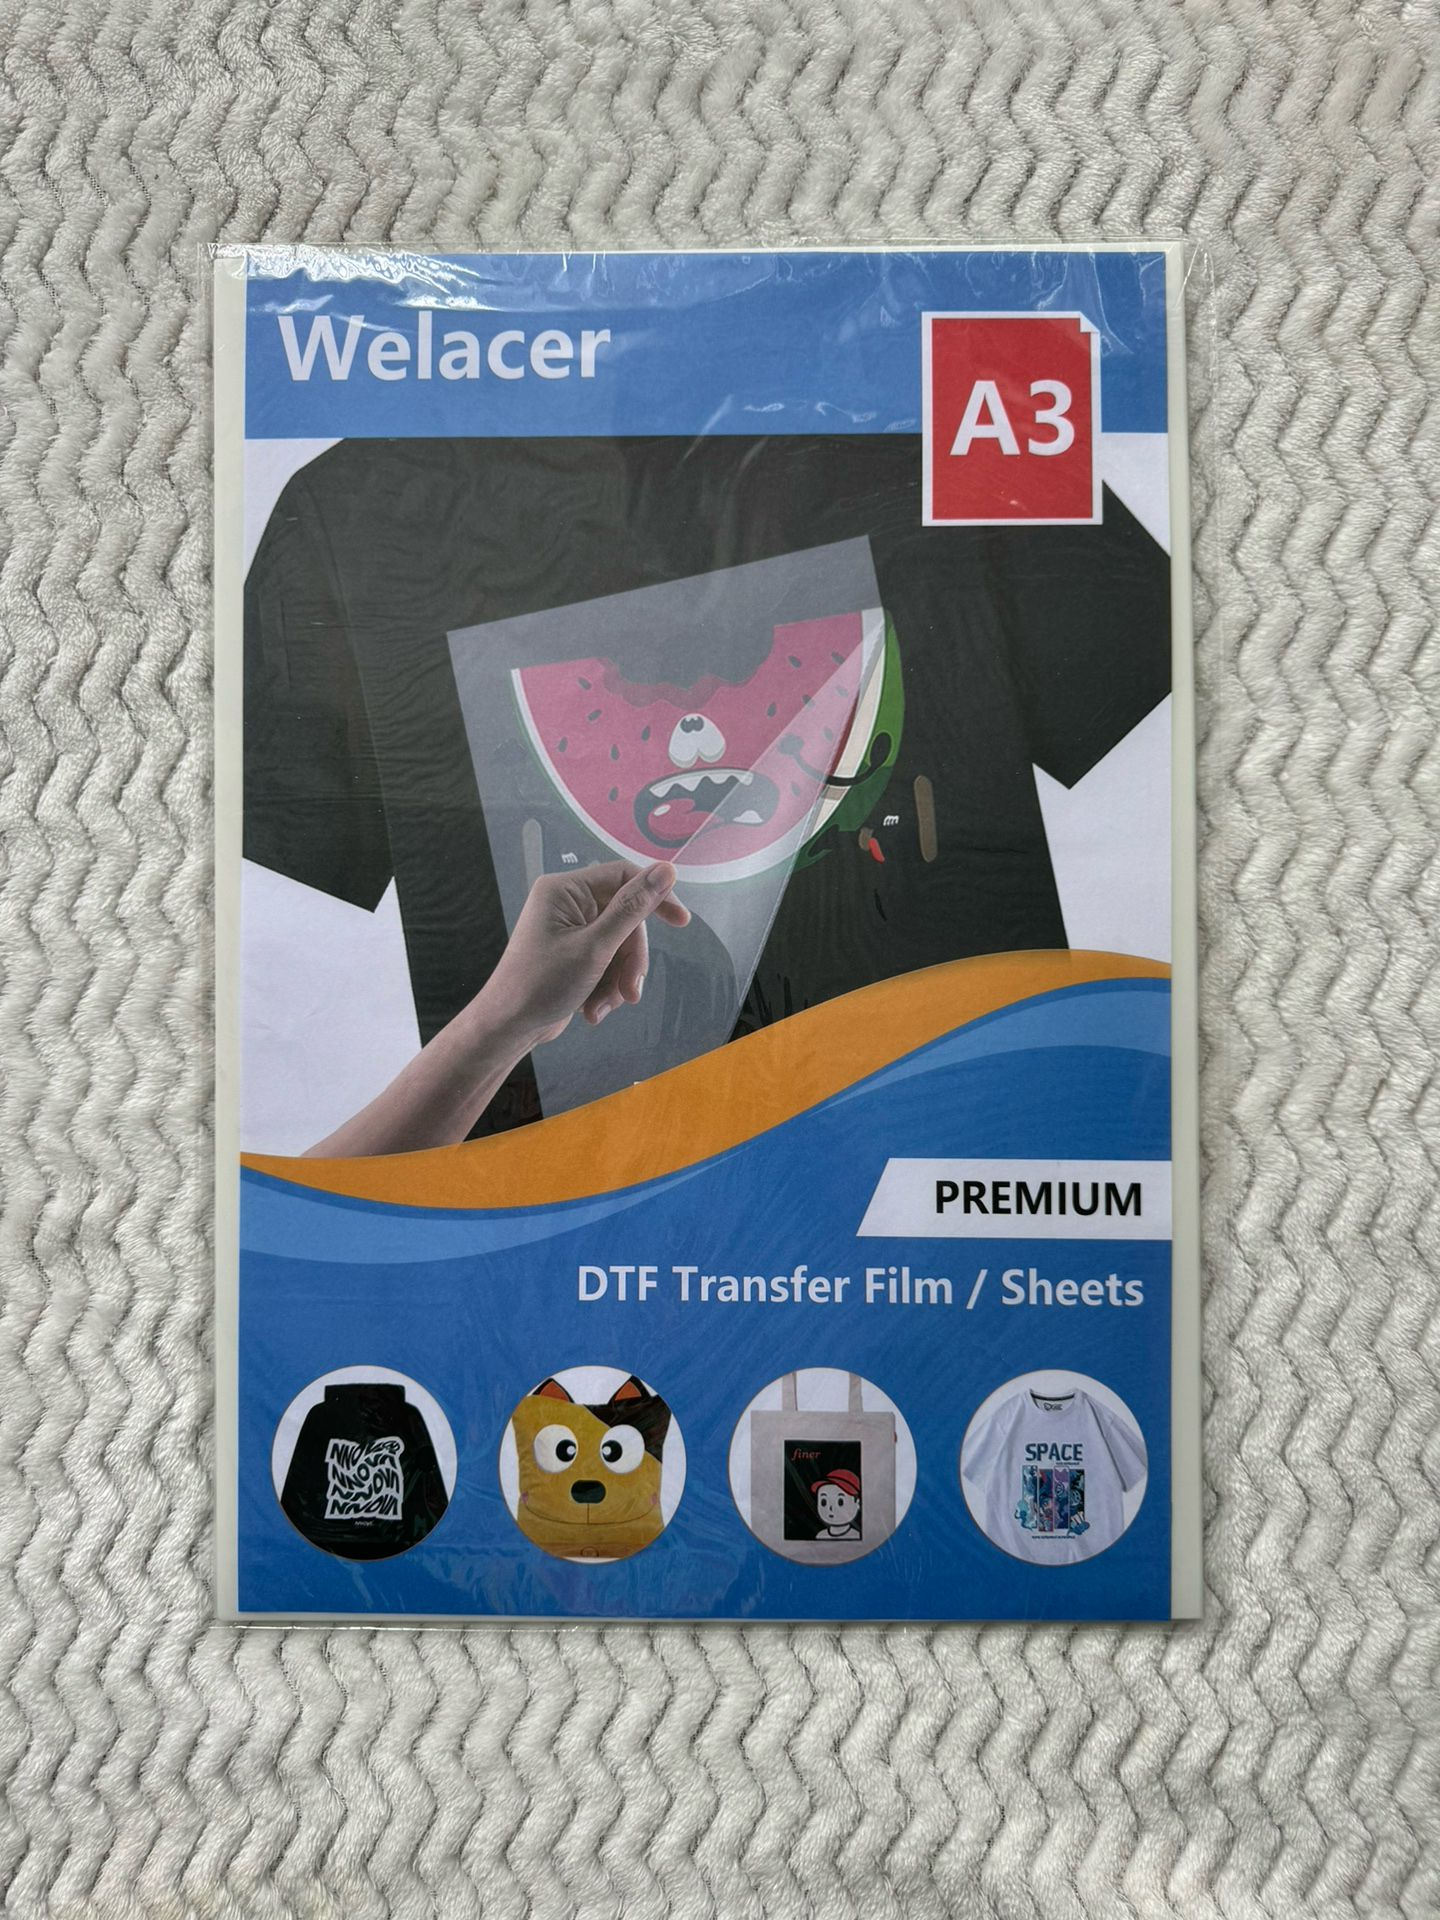 Welacer A3 Premium DTF Transfer Film / Sheets 25ct